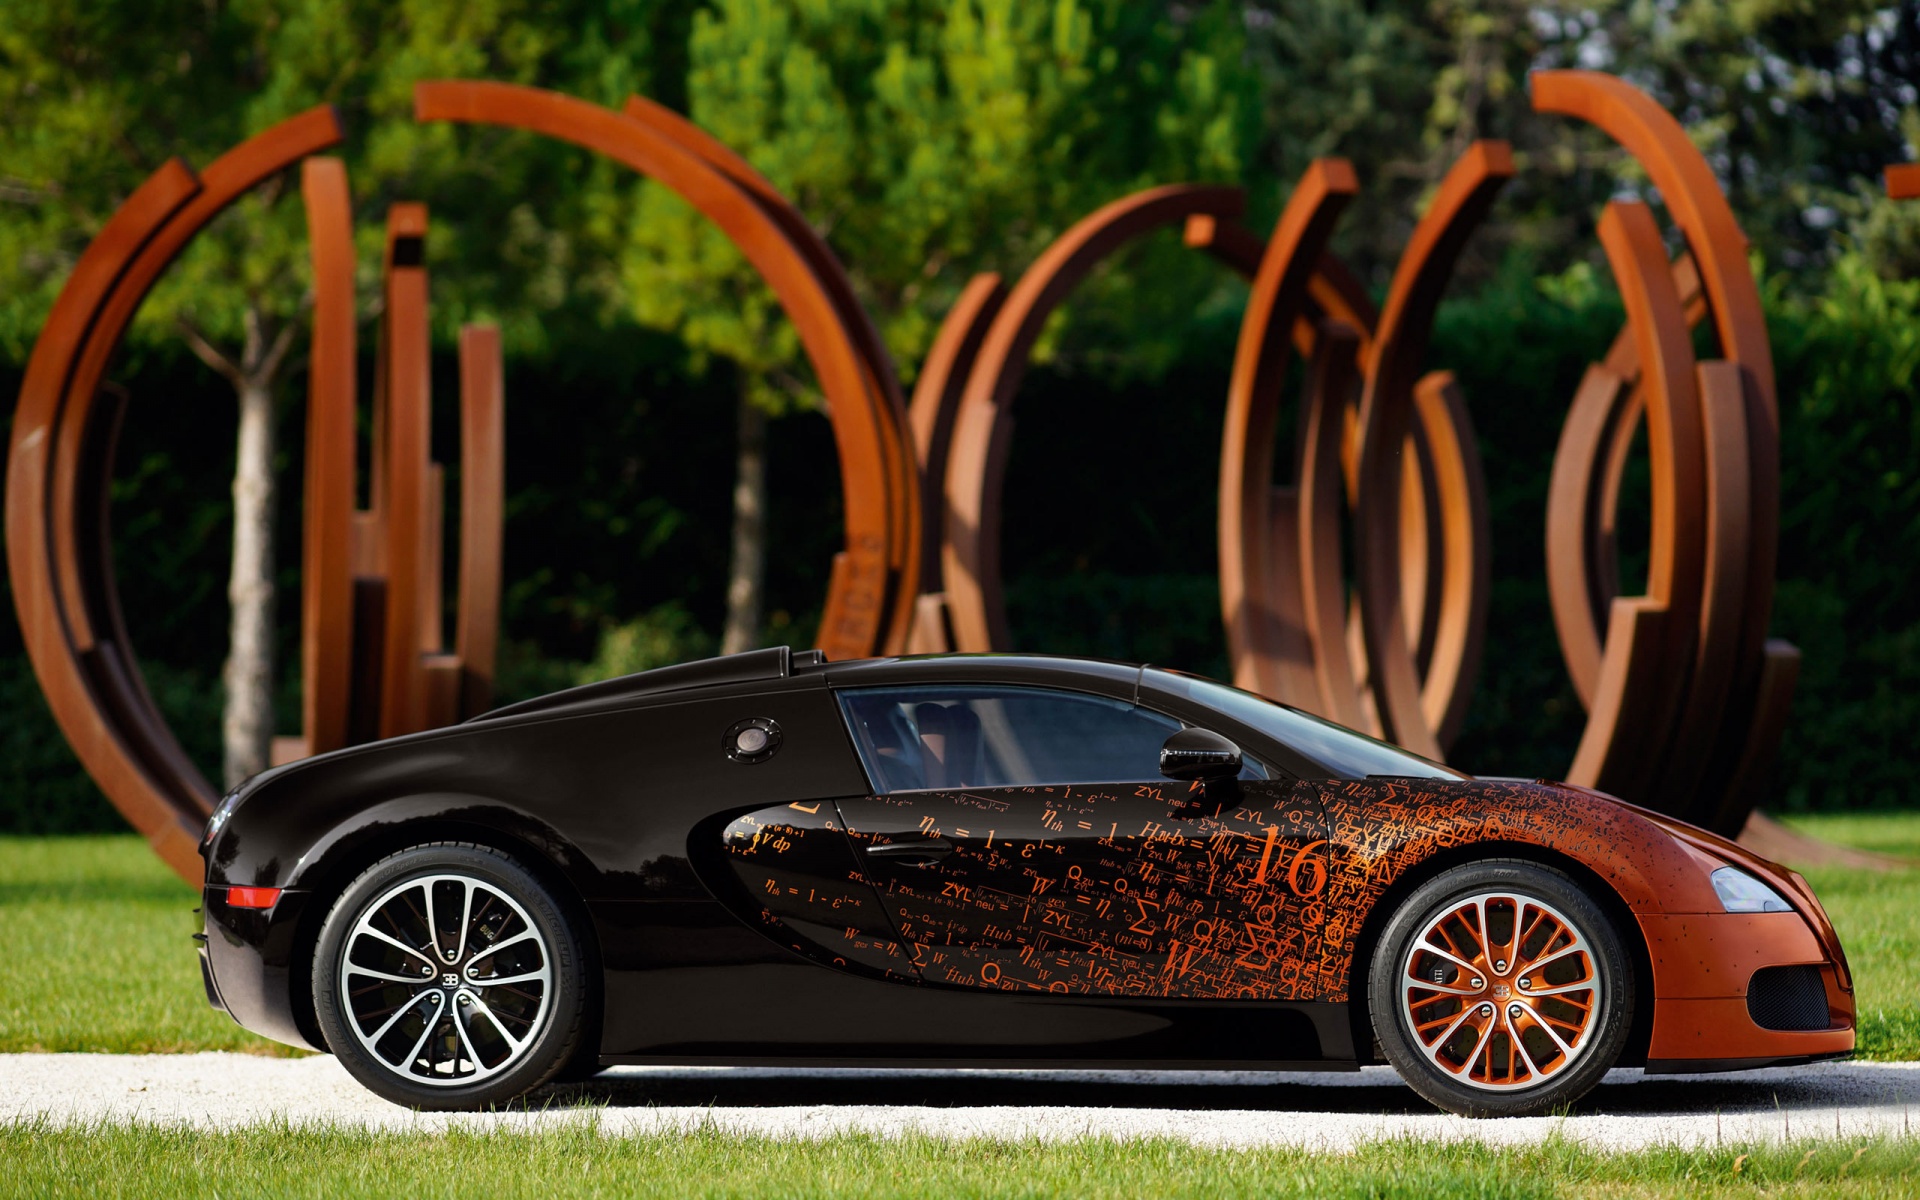 Download Bugatti Veyron Quirky Car Hdwallpaper - Bernar Venet Bugatti Veyron - HD Wallpaper 